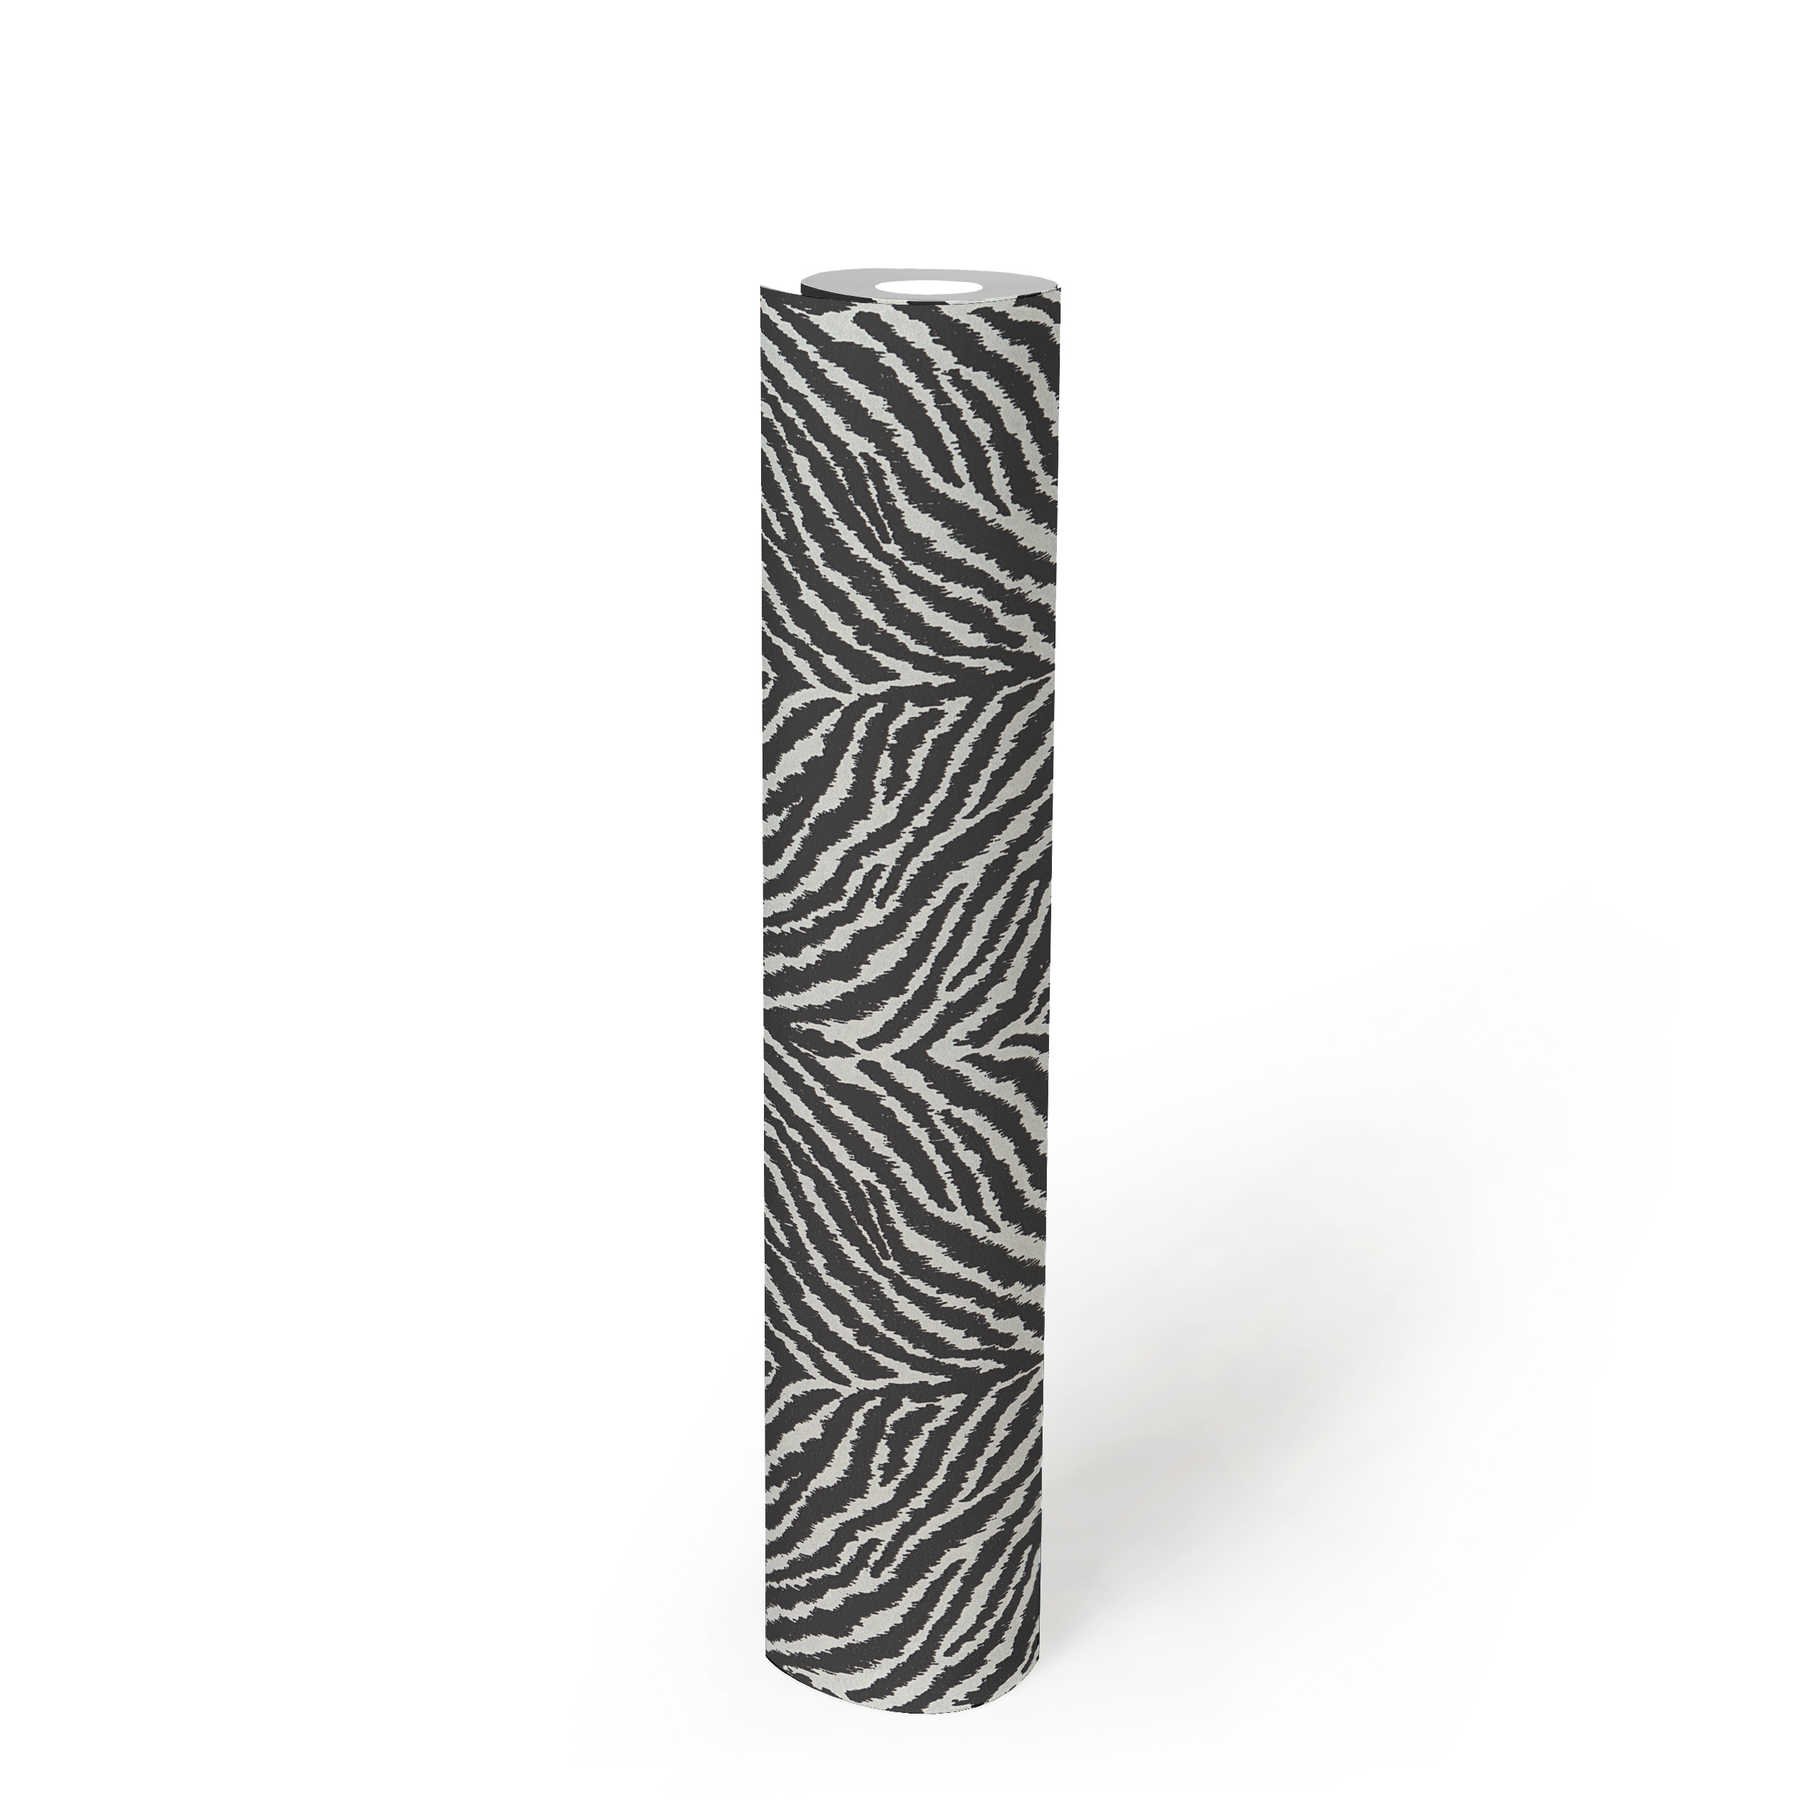             Dierenprint vliesbehang zebrapatroon - zwart, wit
        